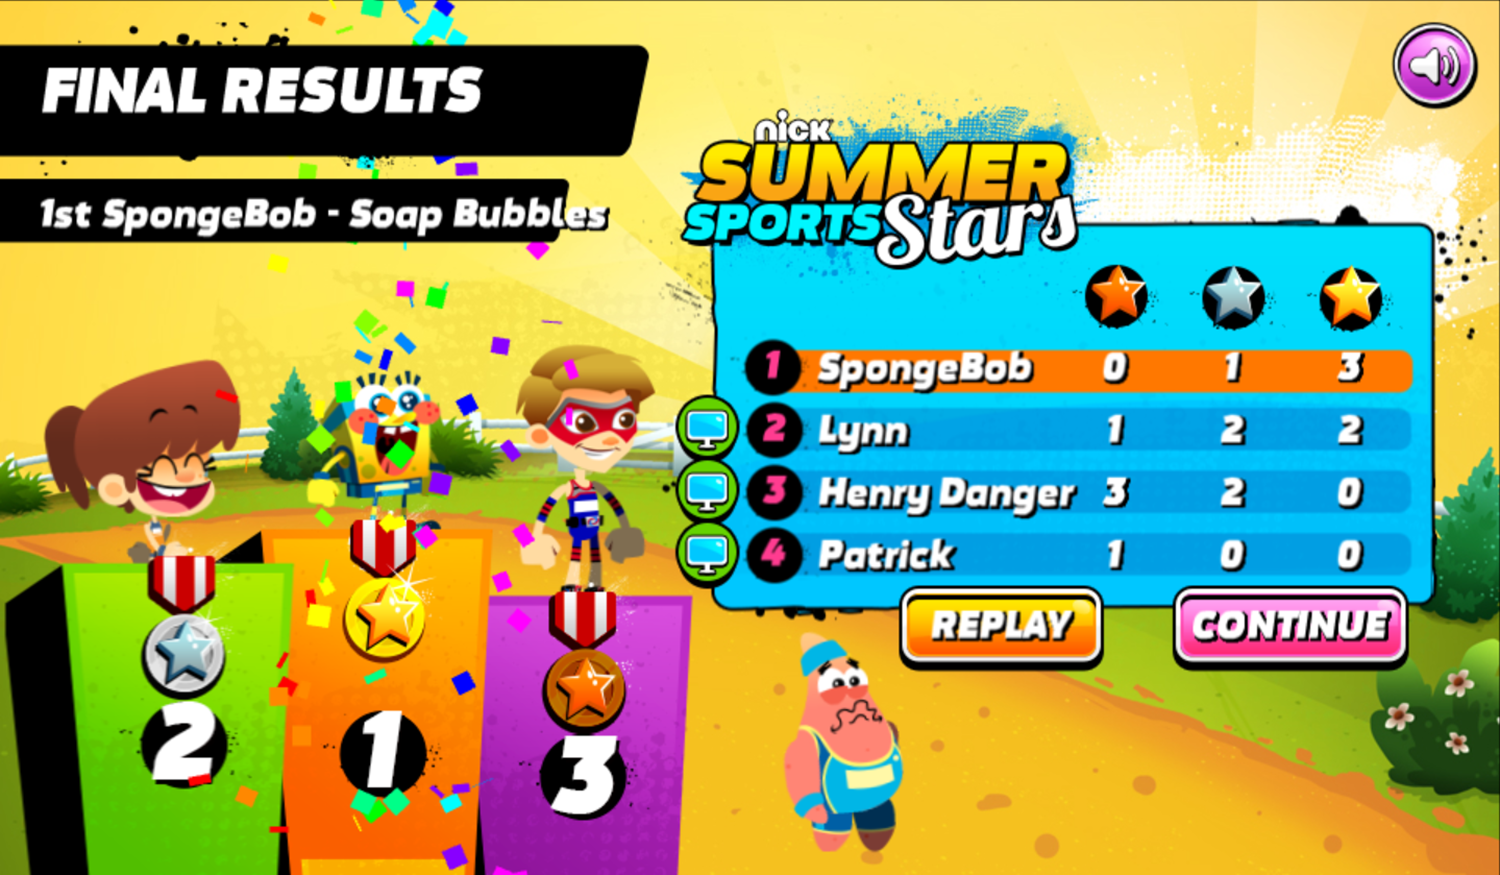 Nick Summer Sports Stars Final Results Game Play Screenshot.